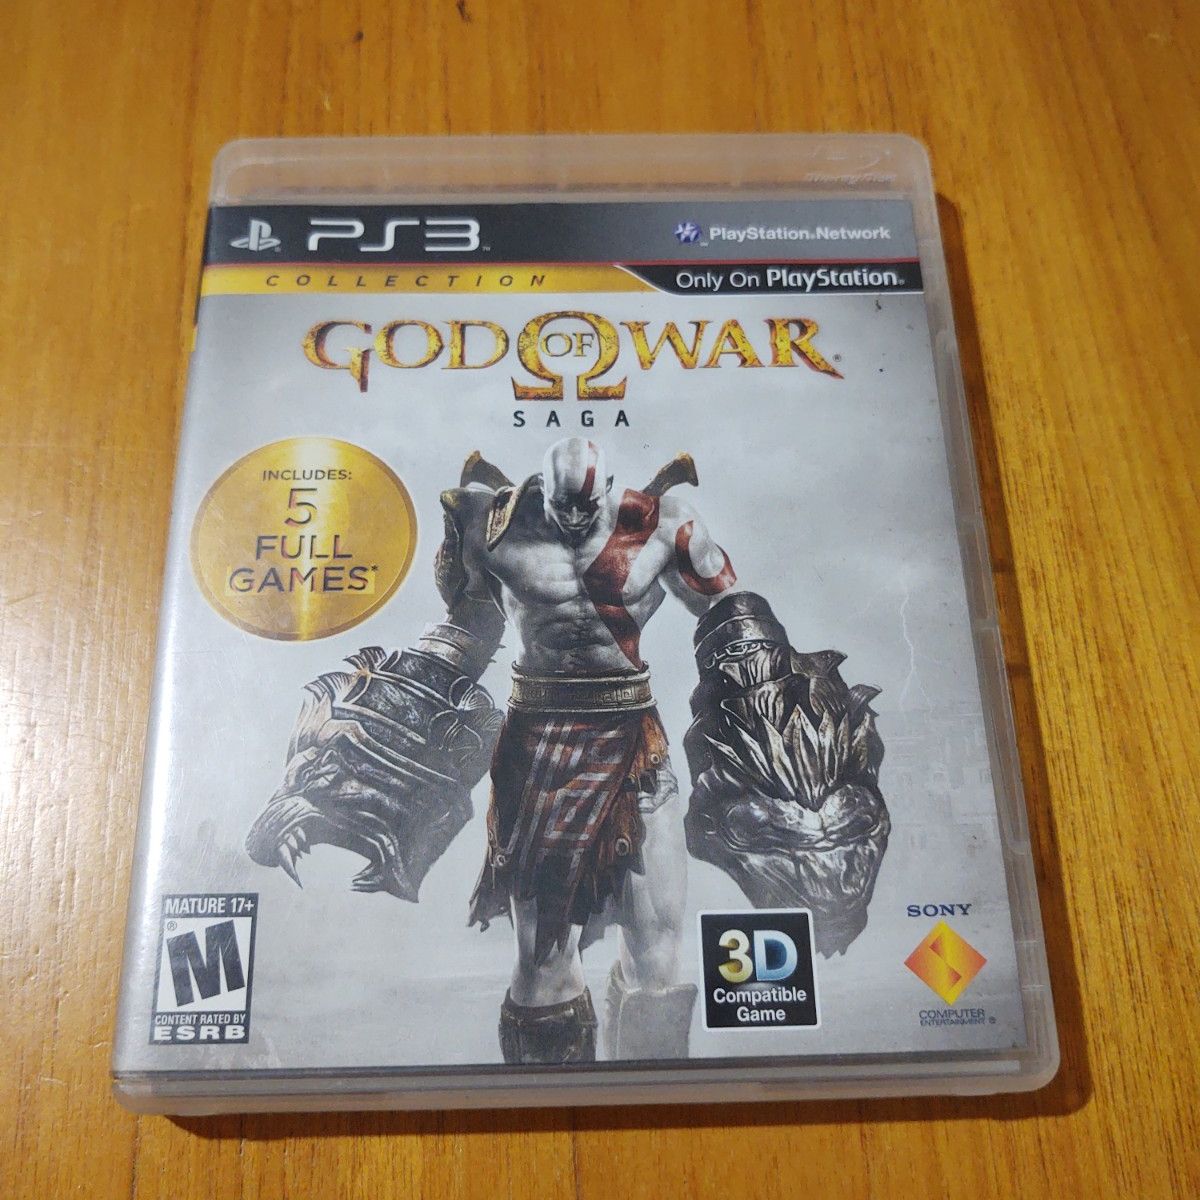 Kit Jogos Ps3 God Of War 3 + God Of War 1 E 2 Collection